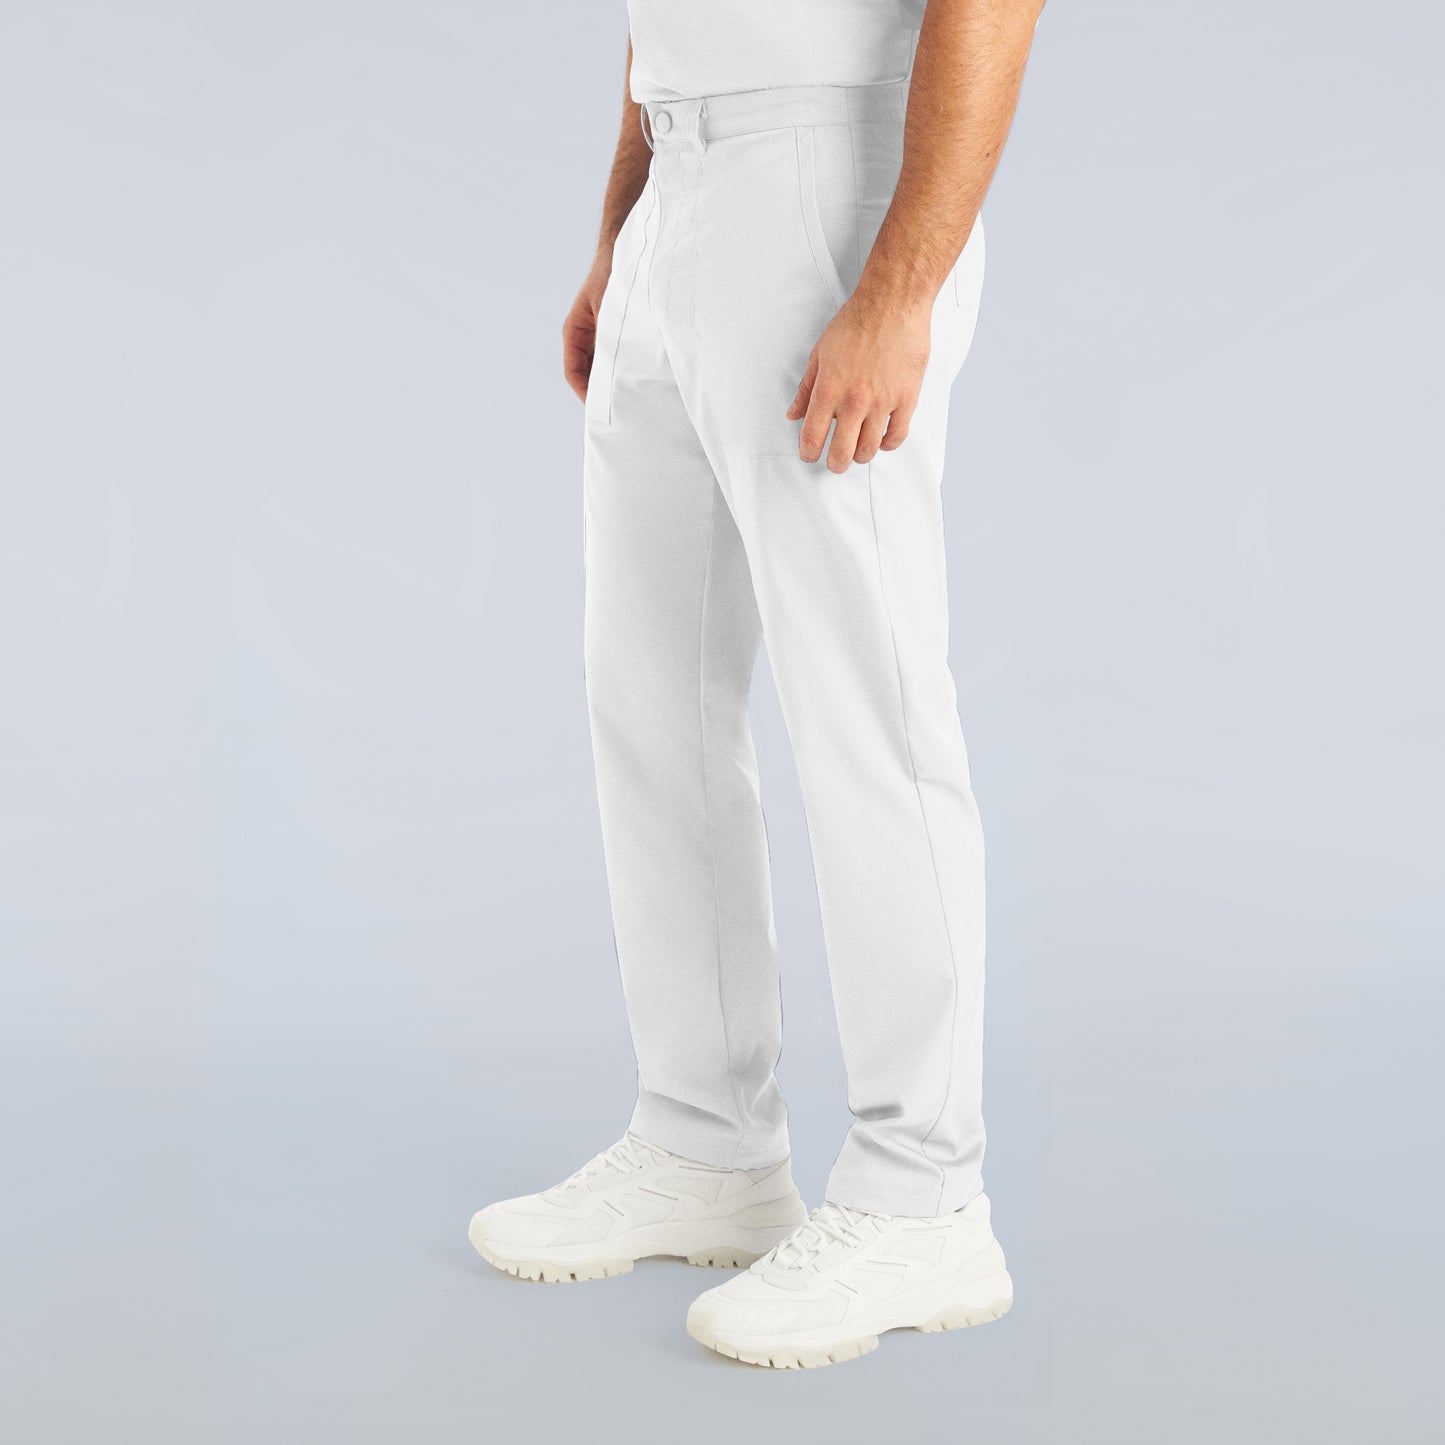 Men's straight pants - PROFLEX - 408